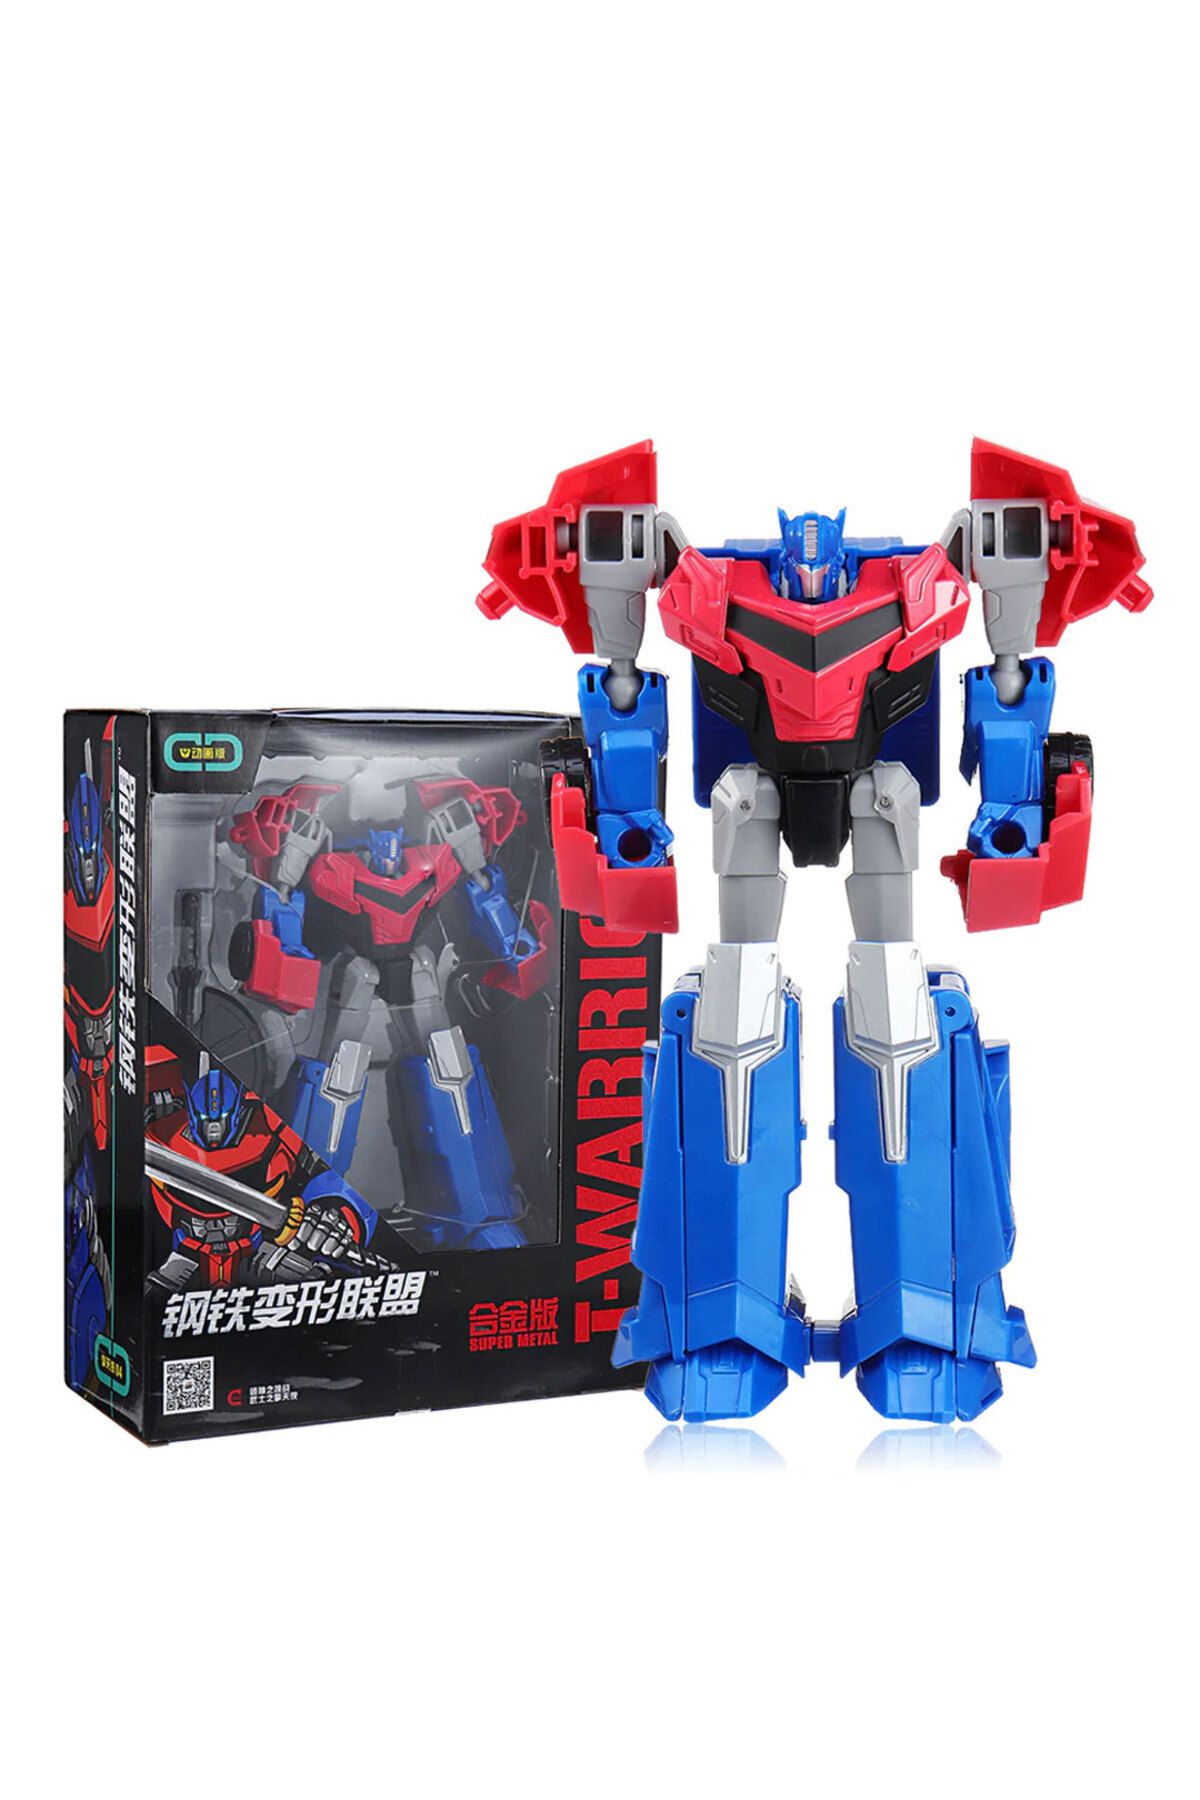 OYUNCAK STORE Transformers Optimus Prime Voyager Koleksiyonu Robot Figür oyuncak Hediyelik